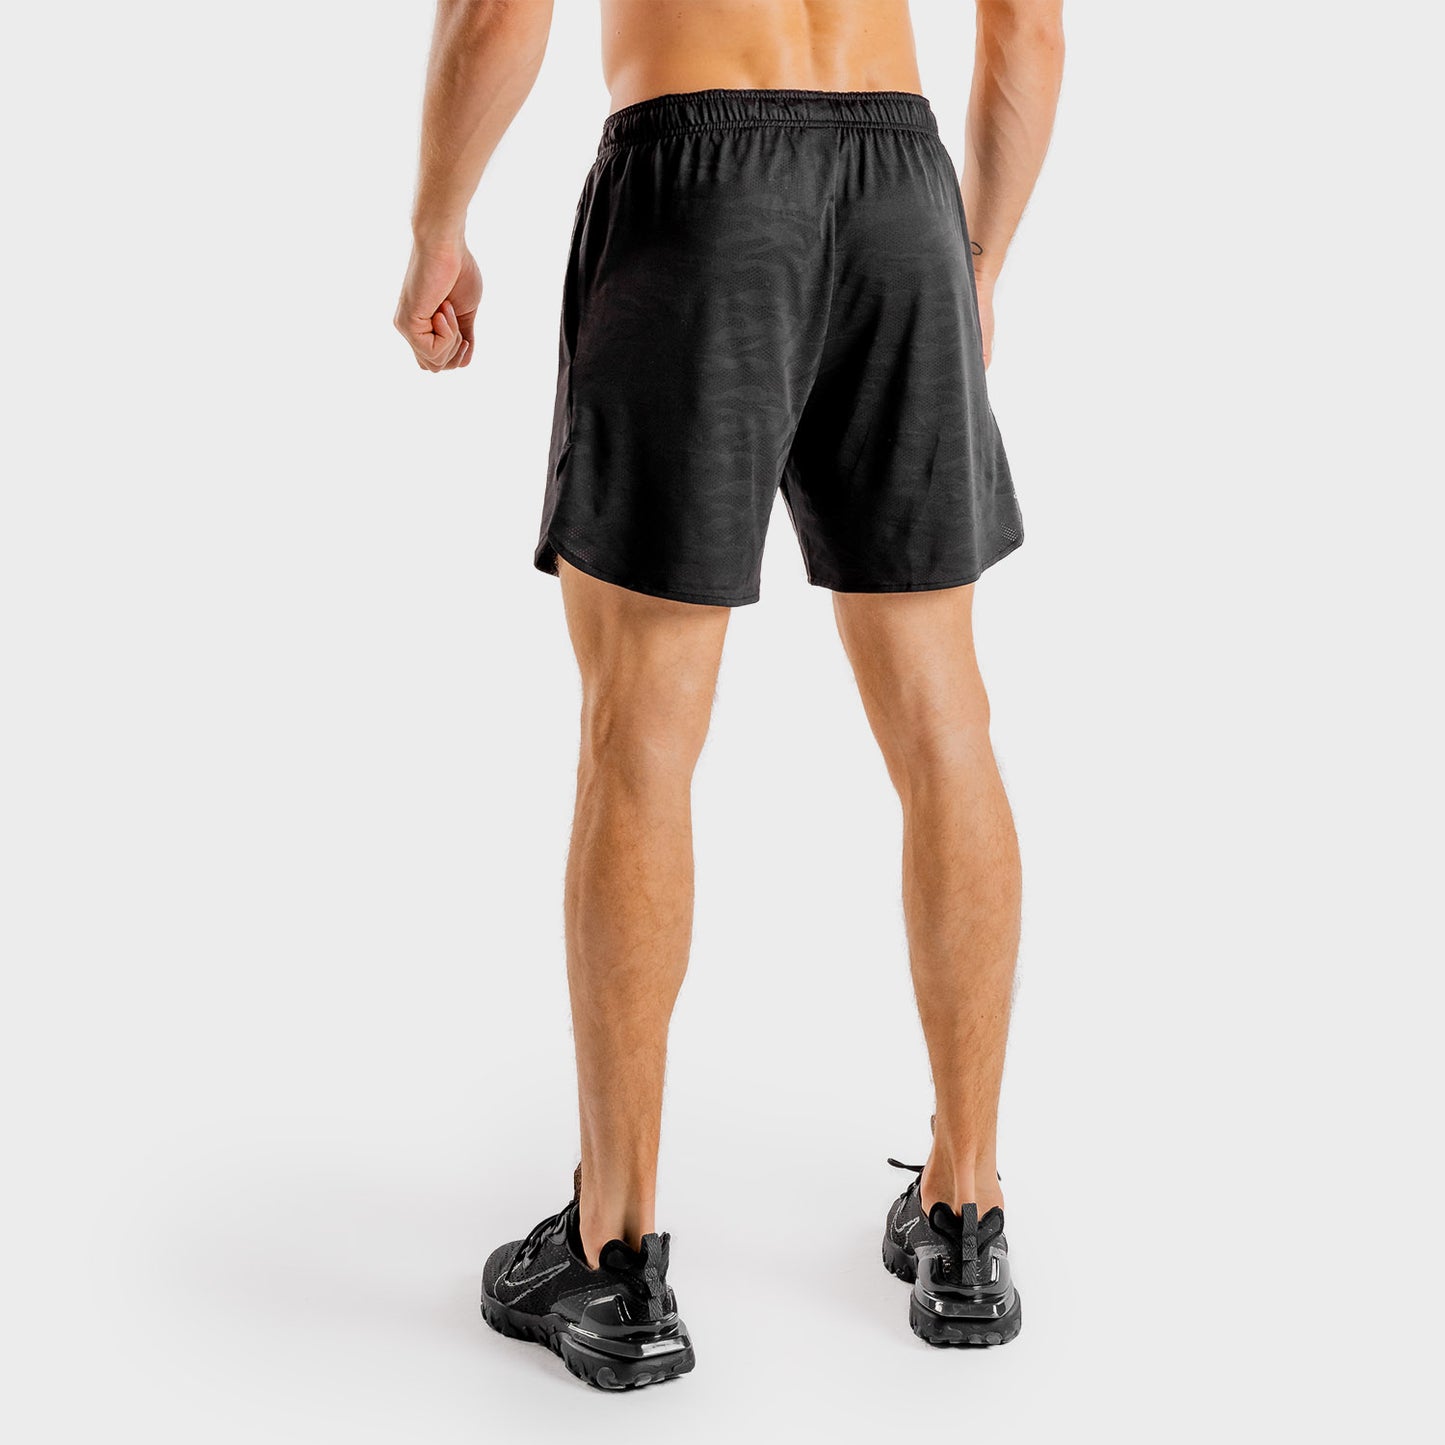 squatwolf-workout-short-for-men-wolf-gym-shorts-black-gym-wear